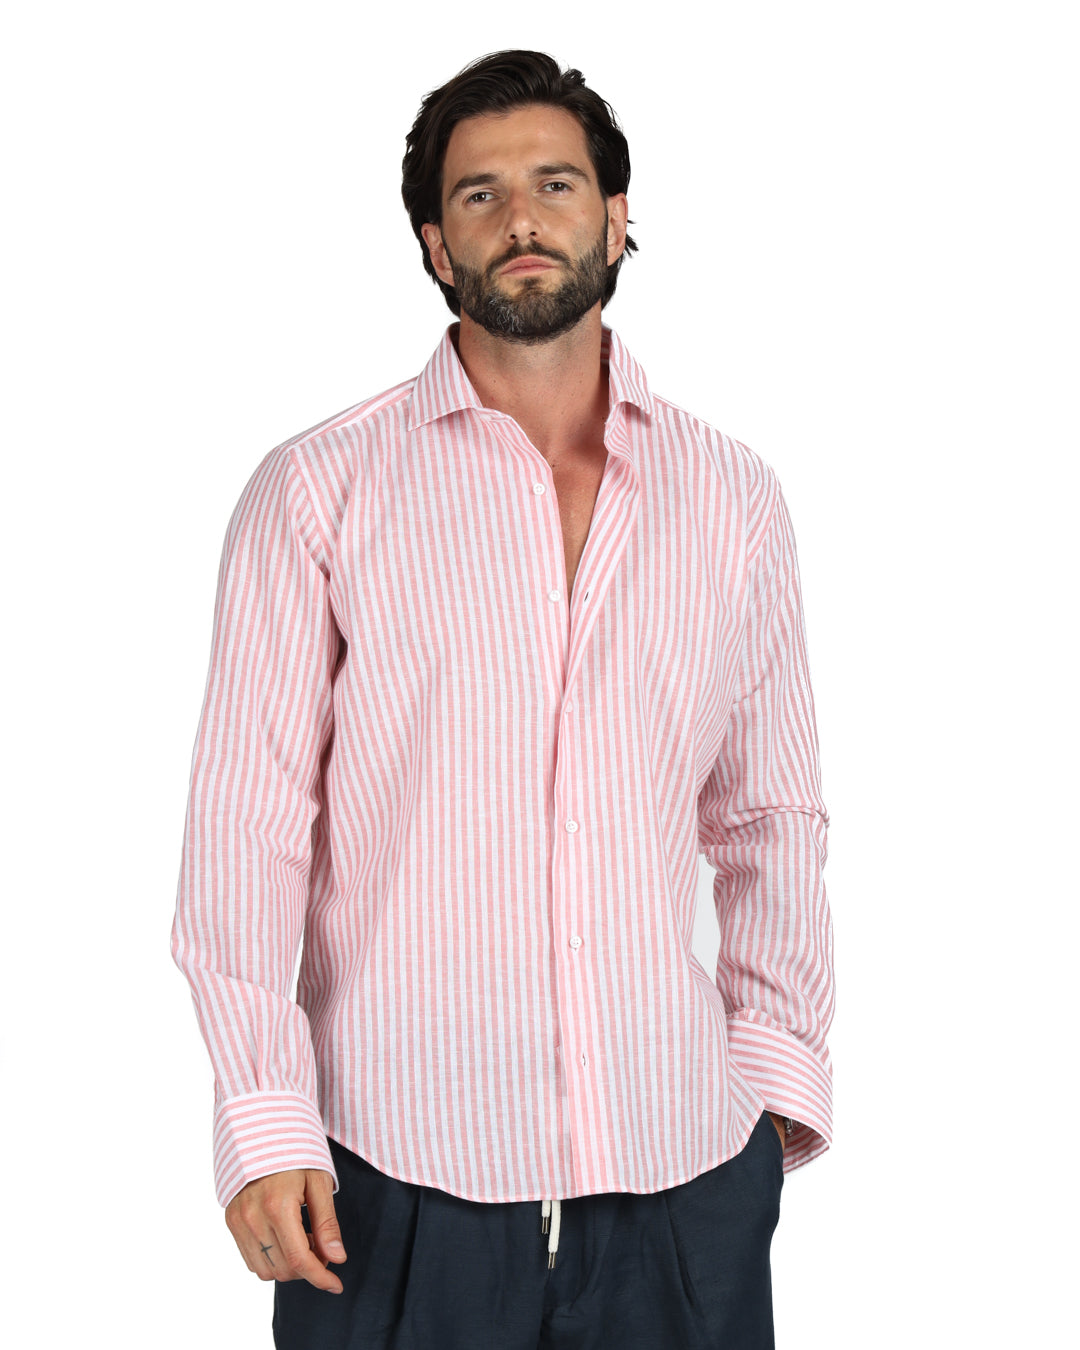 Ischia - Classic pink narrow striped linen shirt